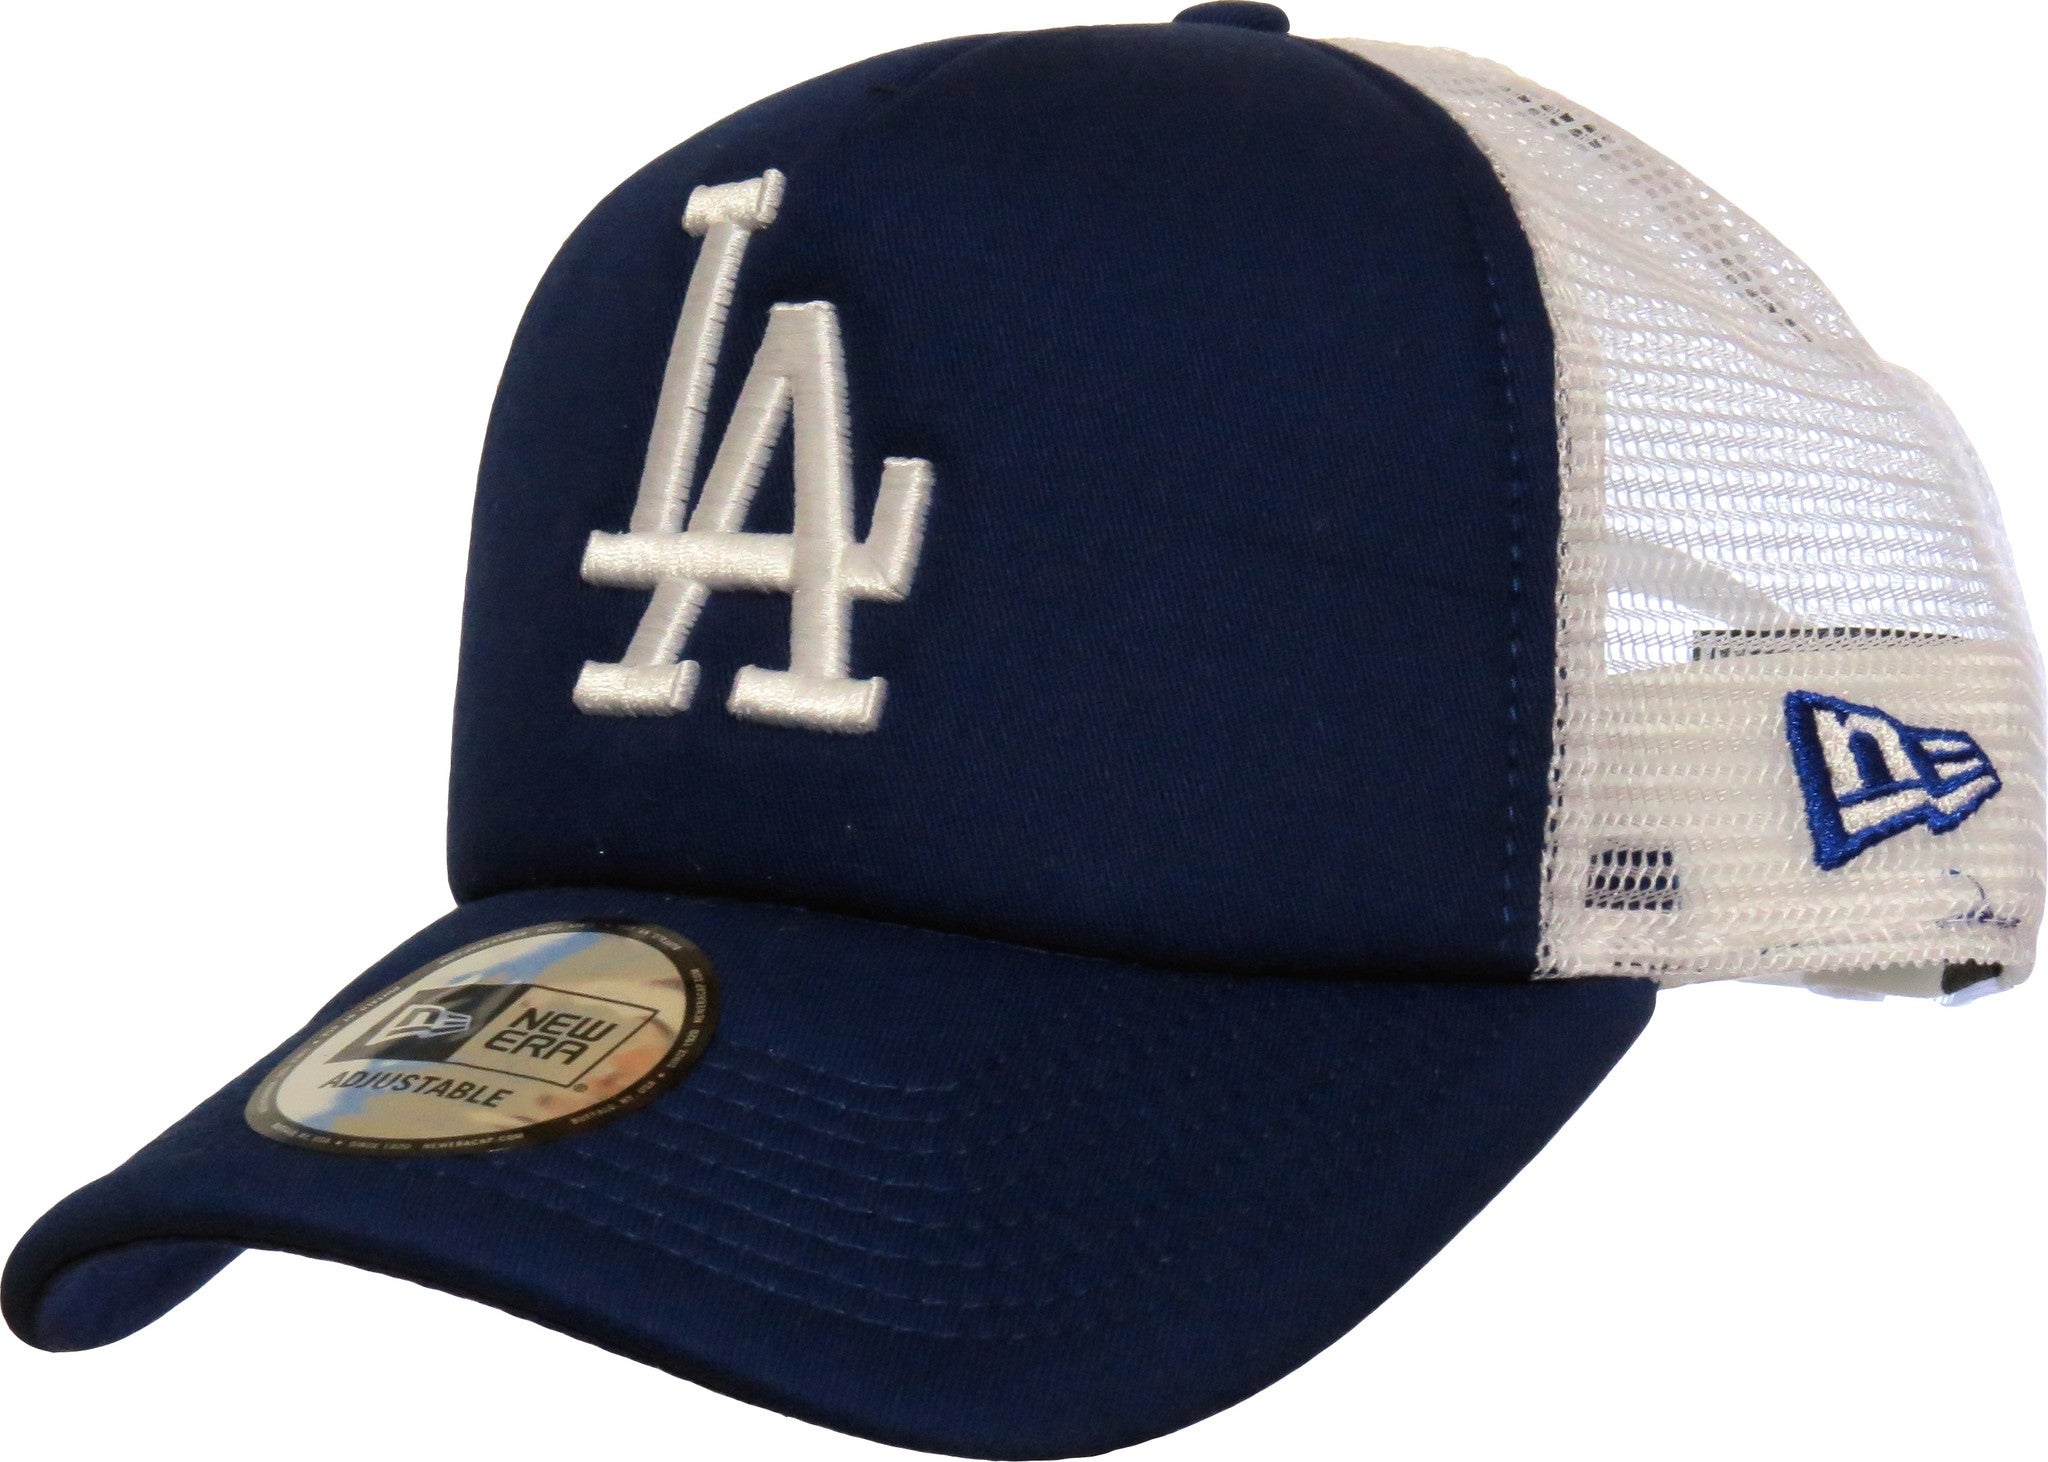 MLB Hat, Baseball Hats, Baseball Cap